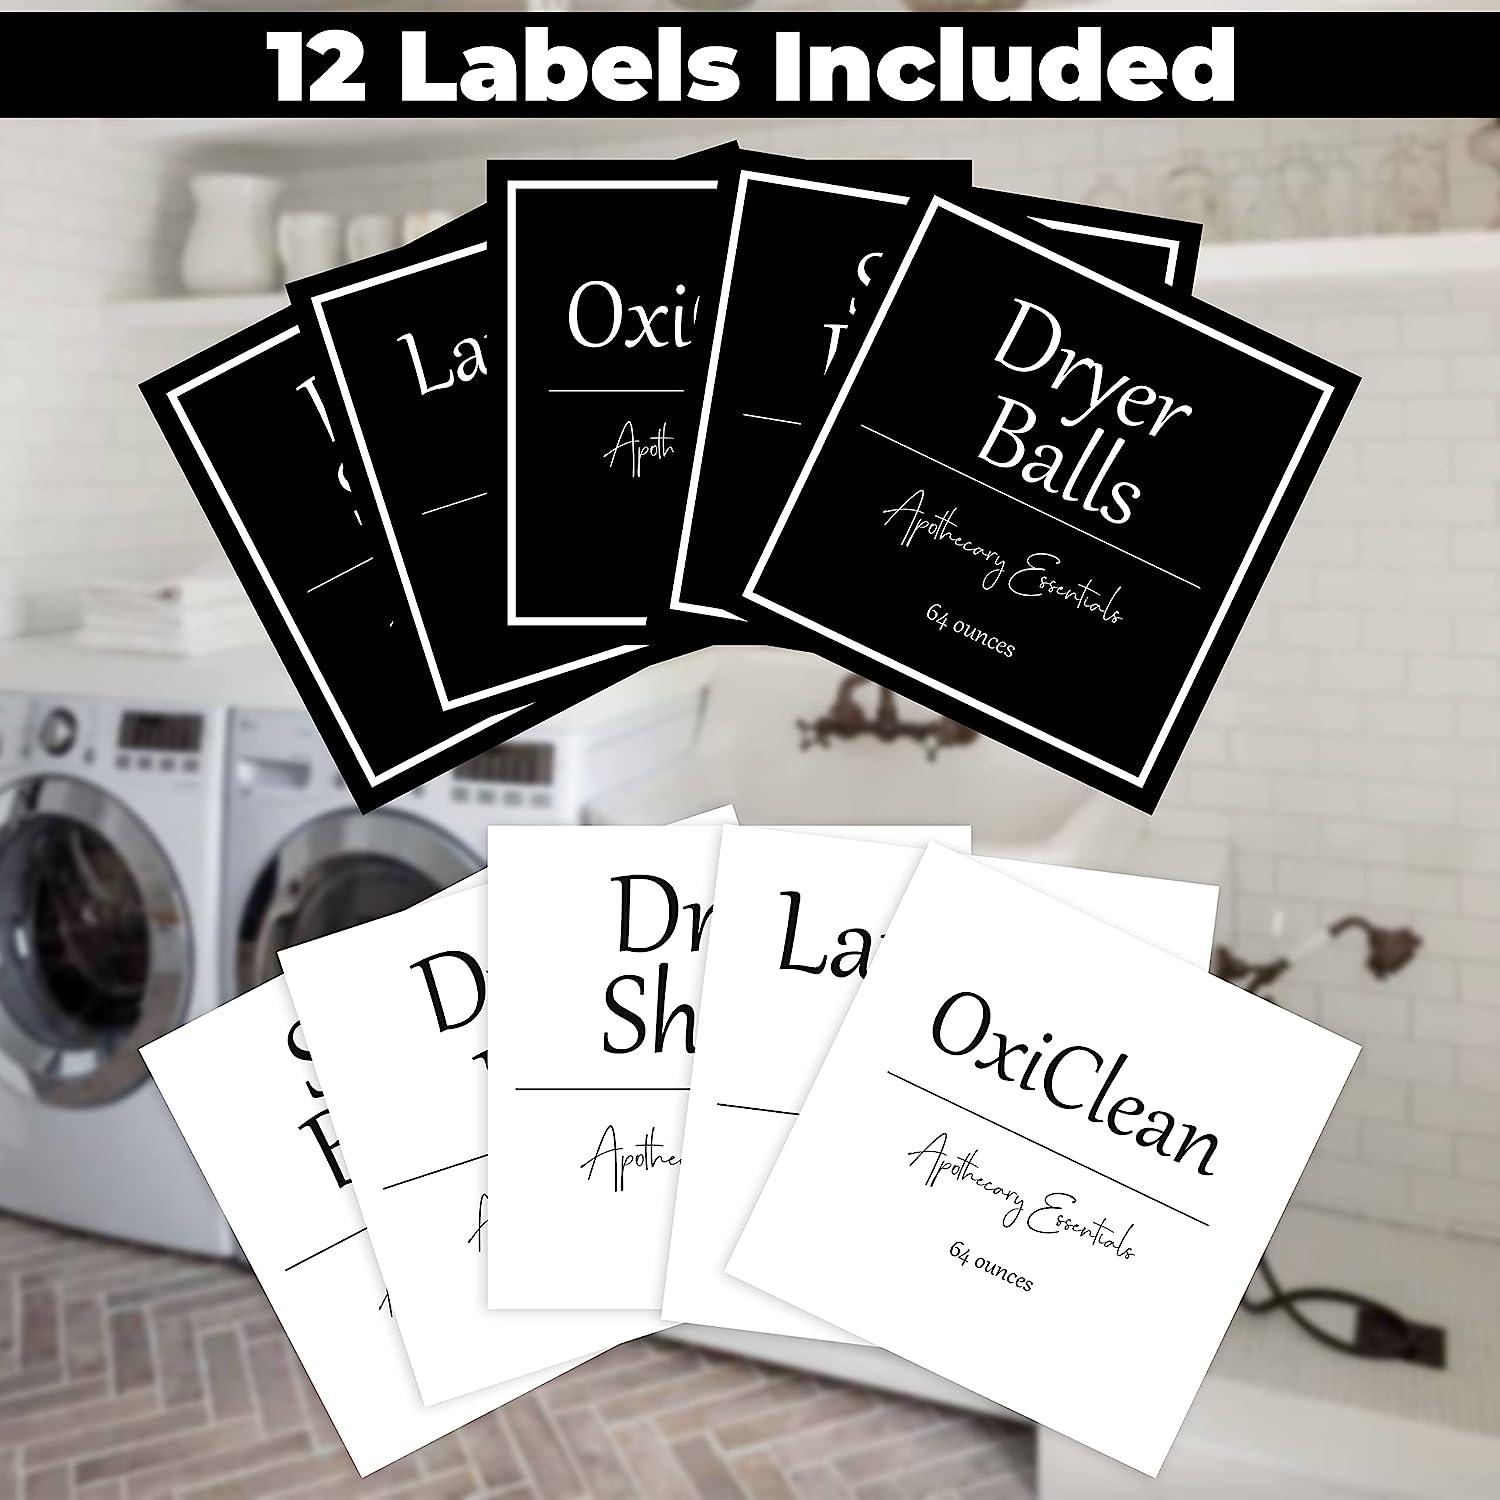 Laundry Room Labels -  Australia